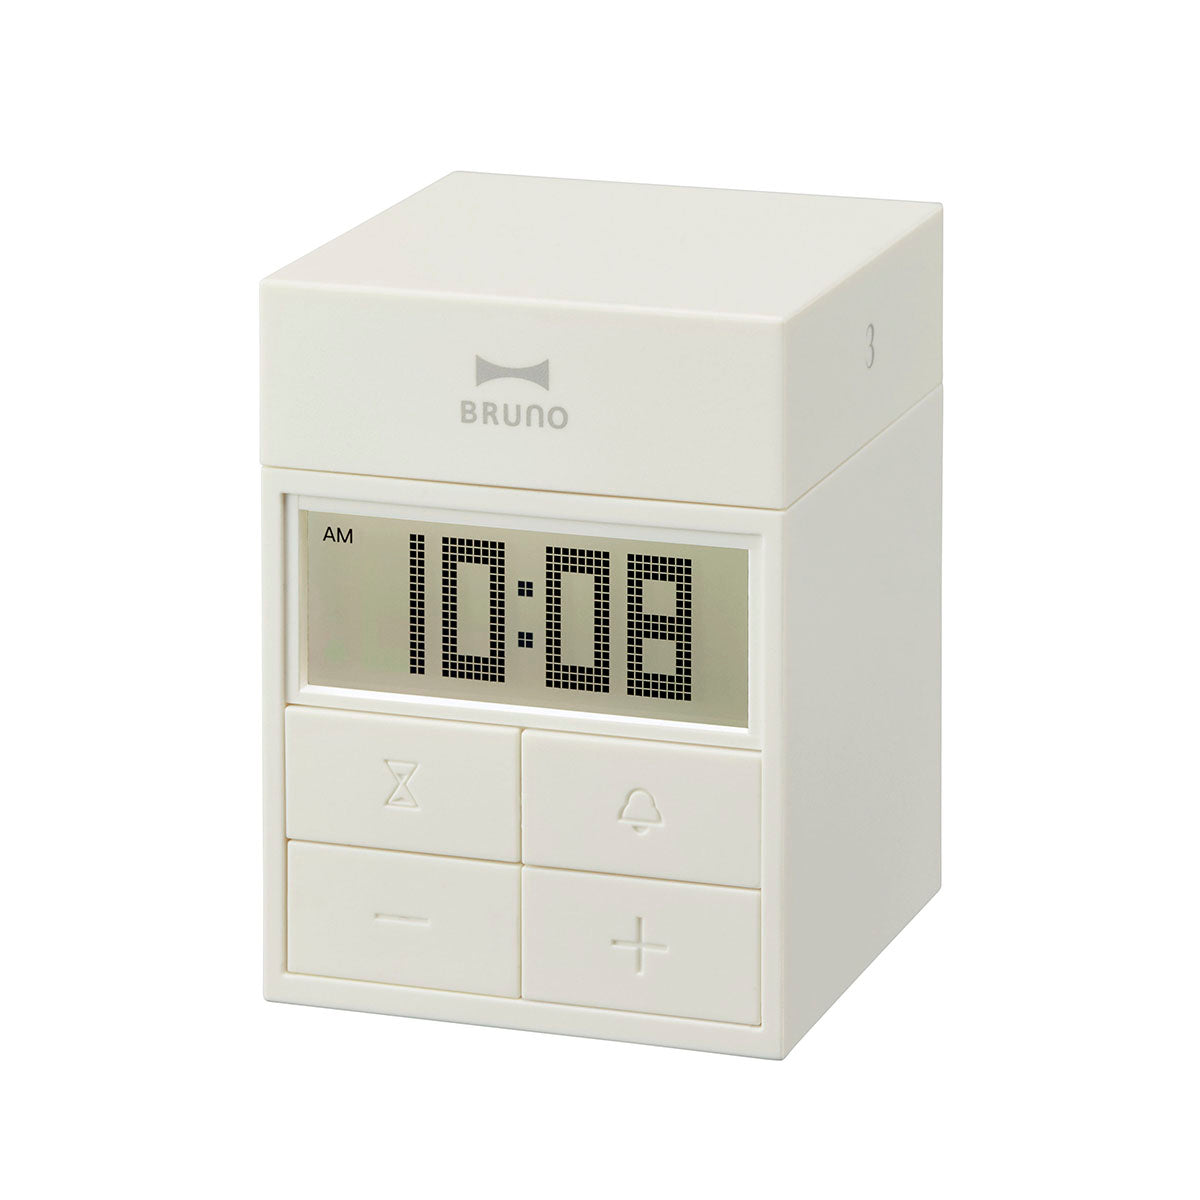 BRUNO Twist Table Clock - White BCA026-WH